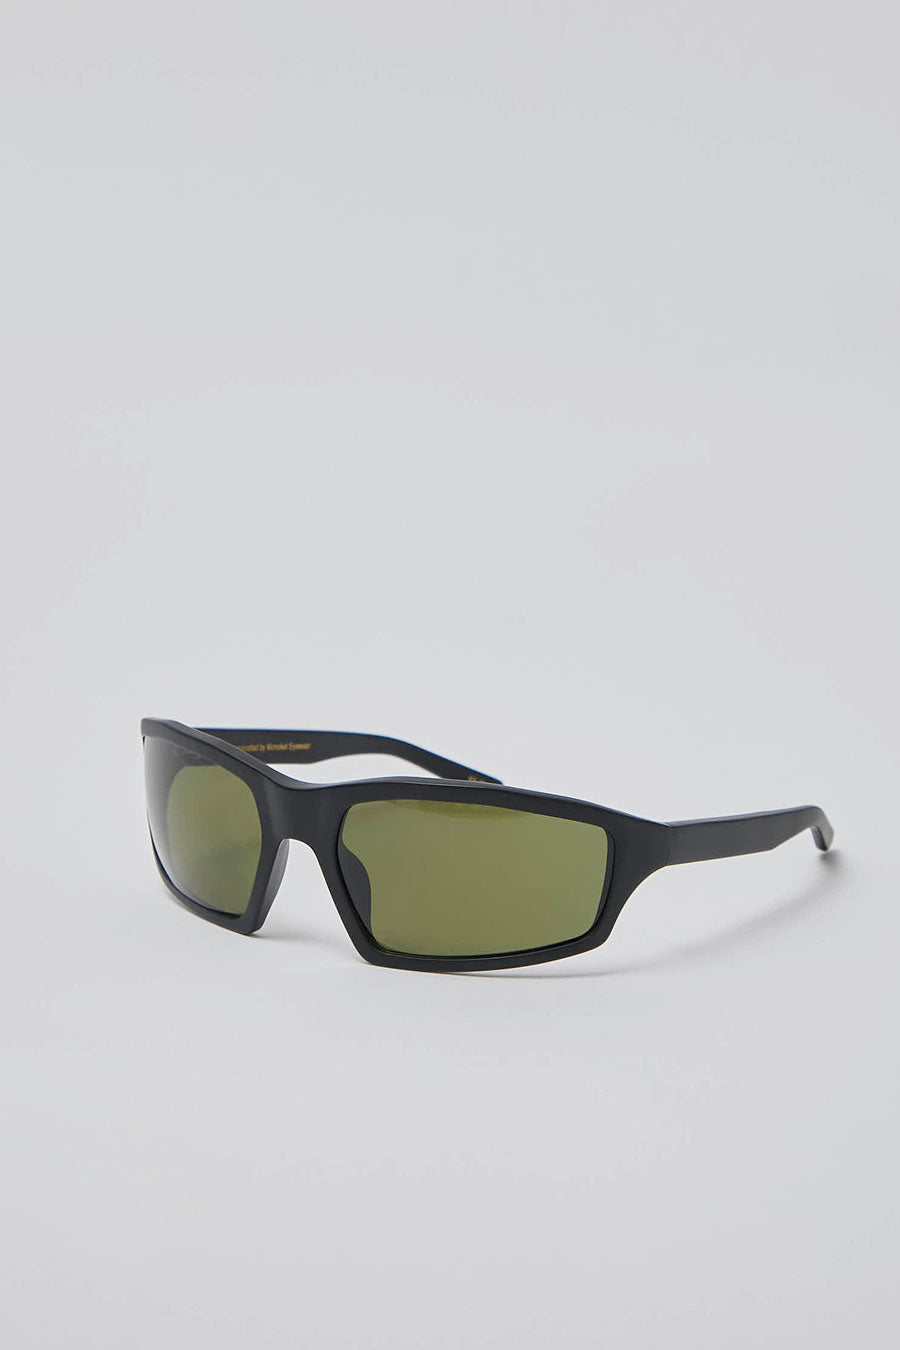 Monokel Raven Sunglasses in Matte Black and Green